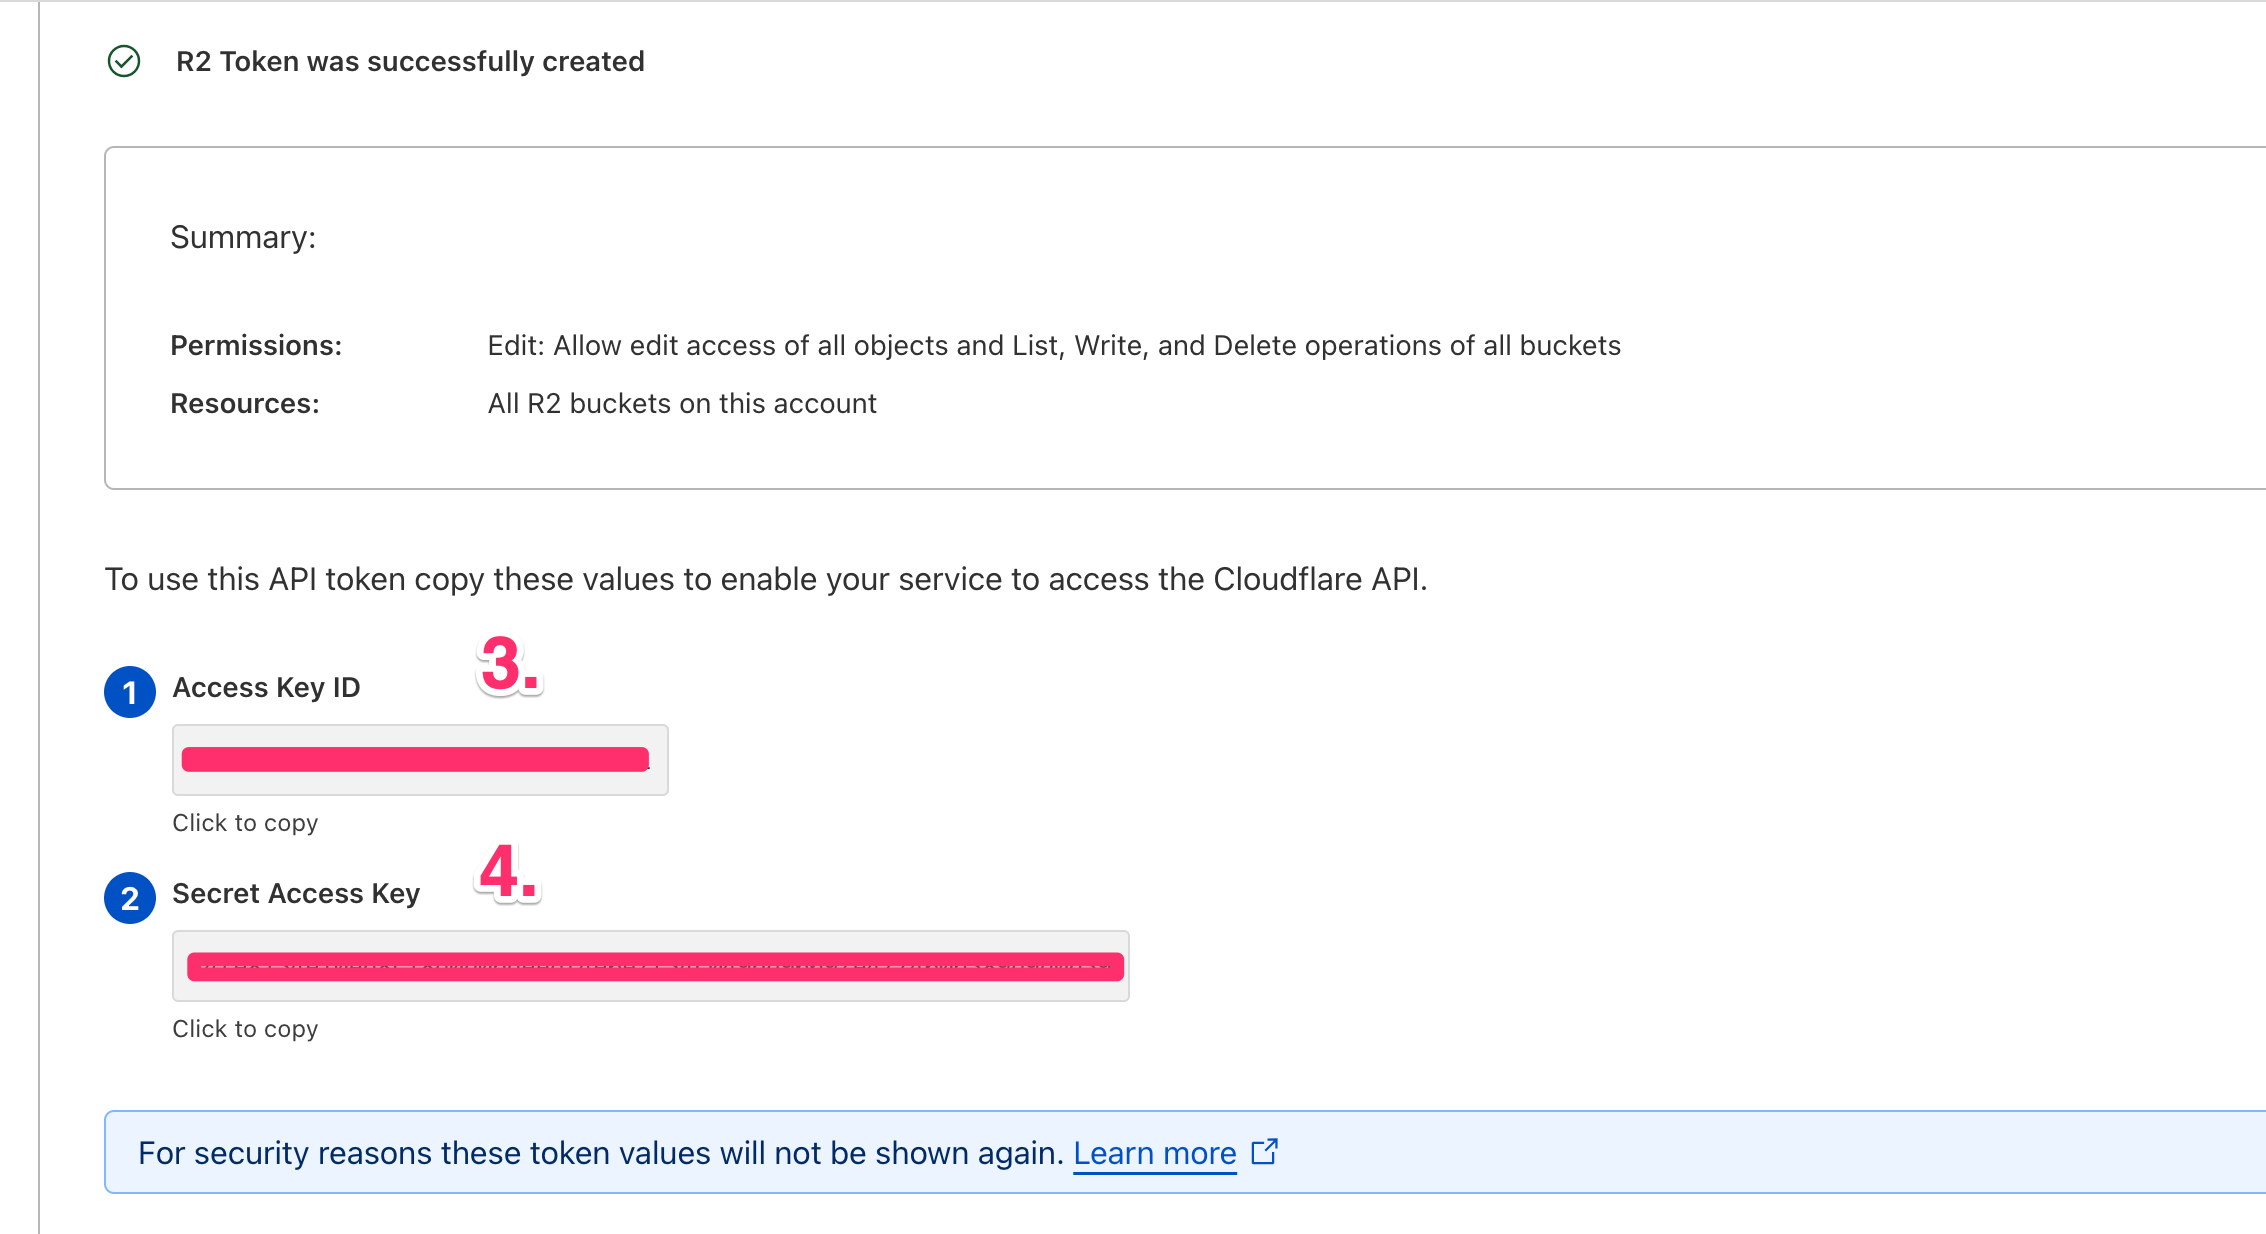 Cloudflare R2 API access key and secret